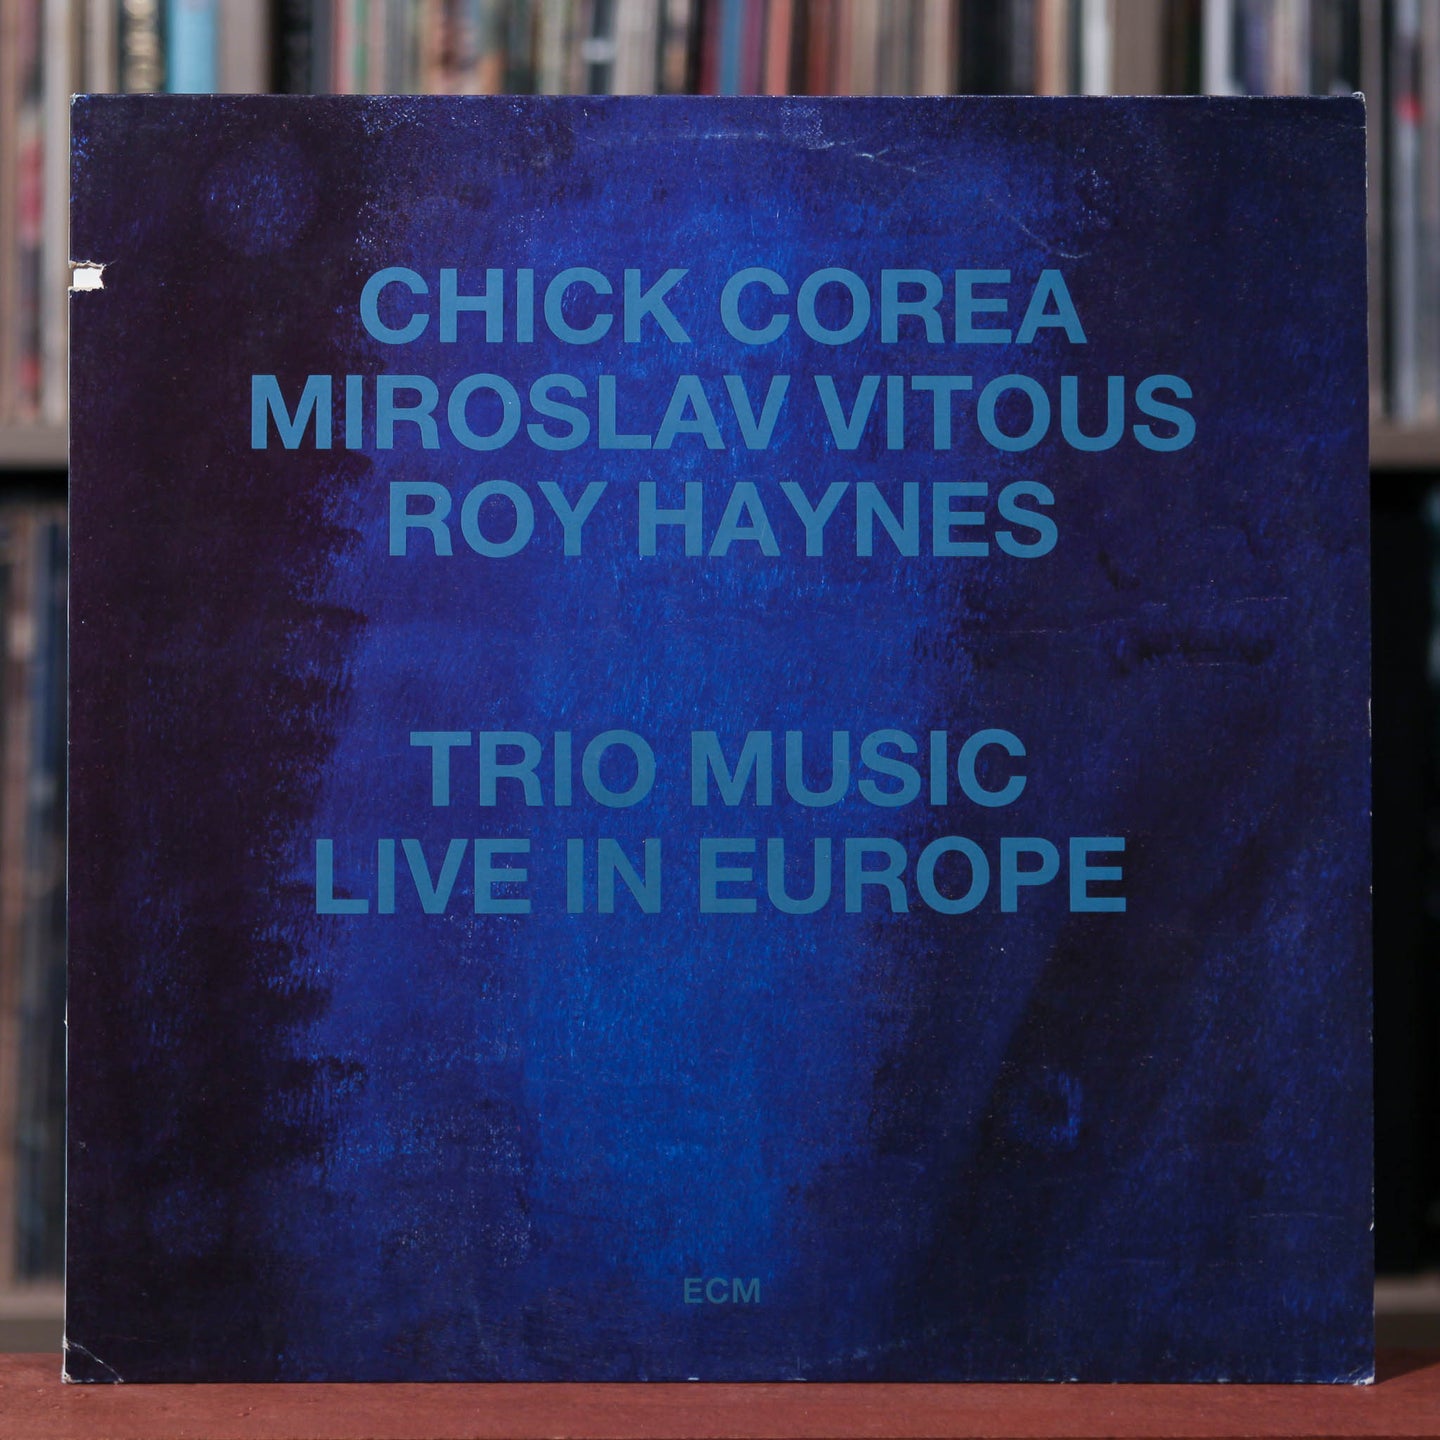 Chick Corea, Miroslav Vitous, Roy Haynes - Trio Music Live in Europe - 1986 ECM Germany - VG+/EX